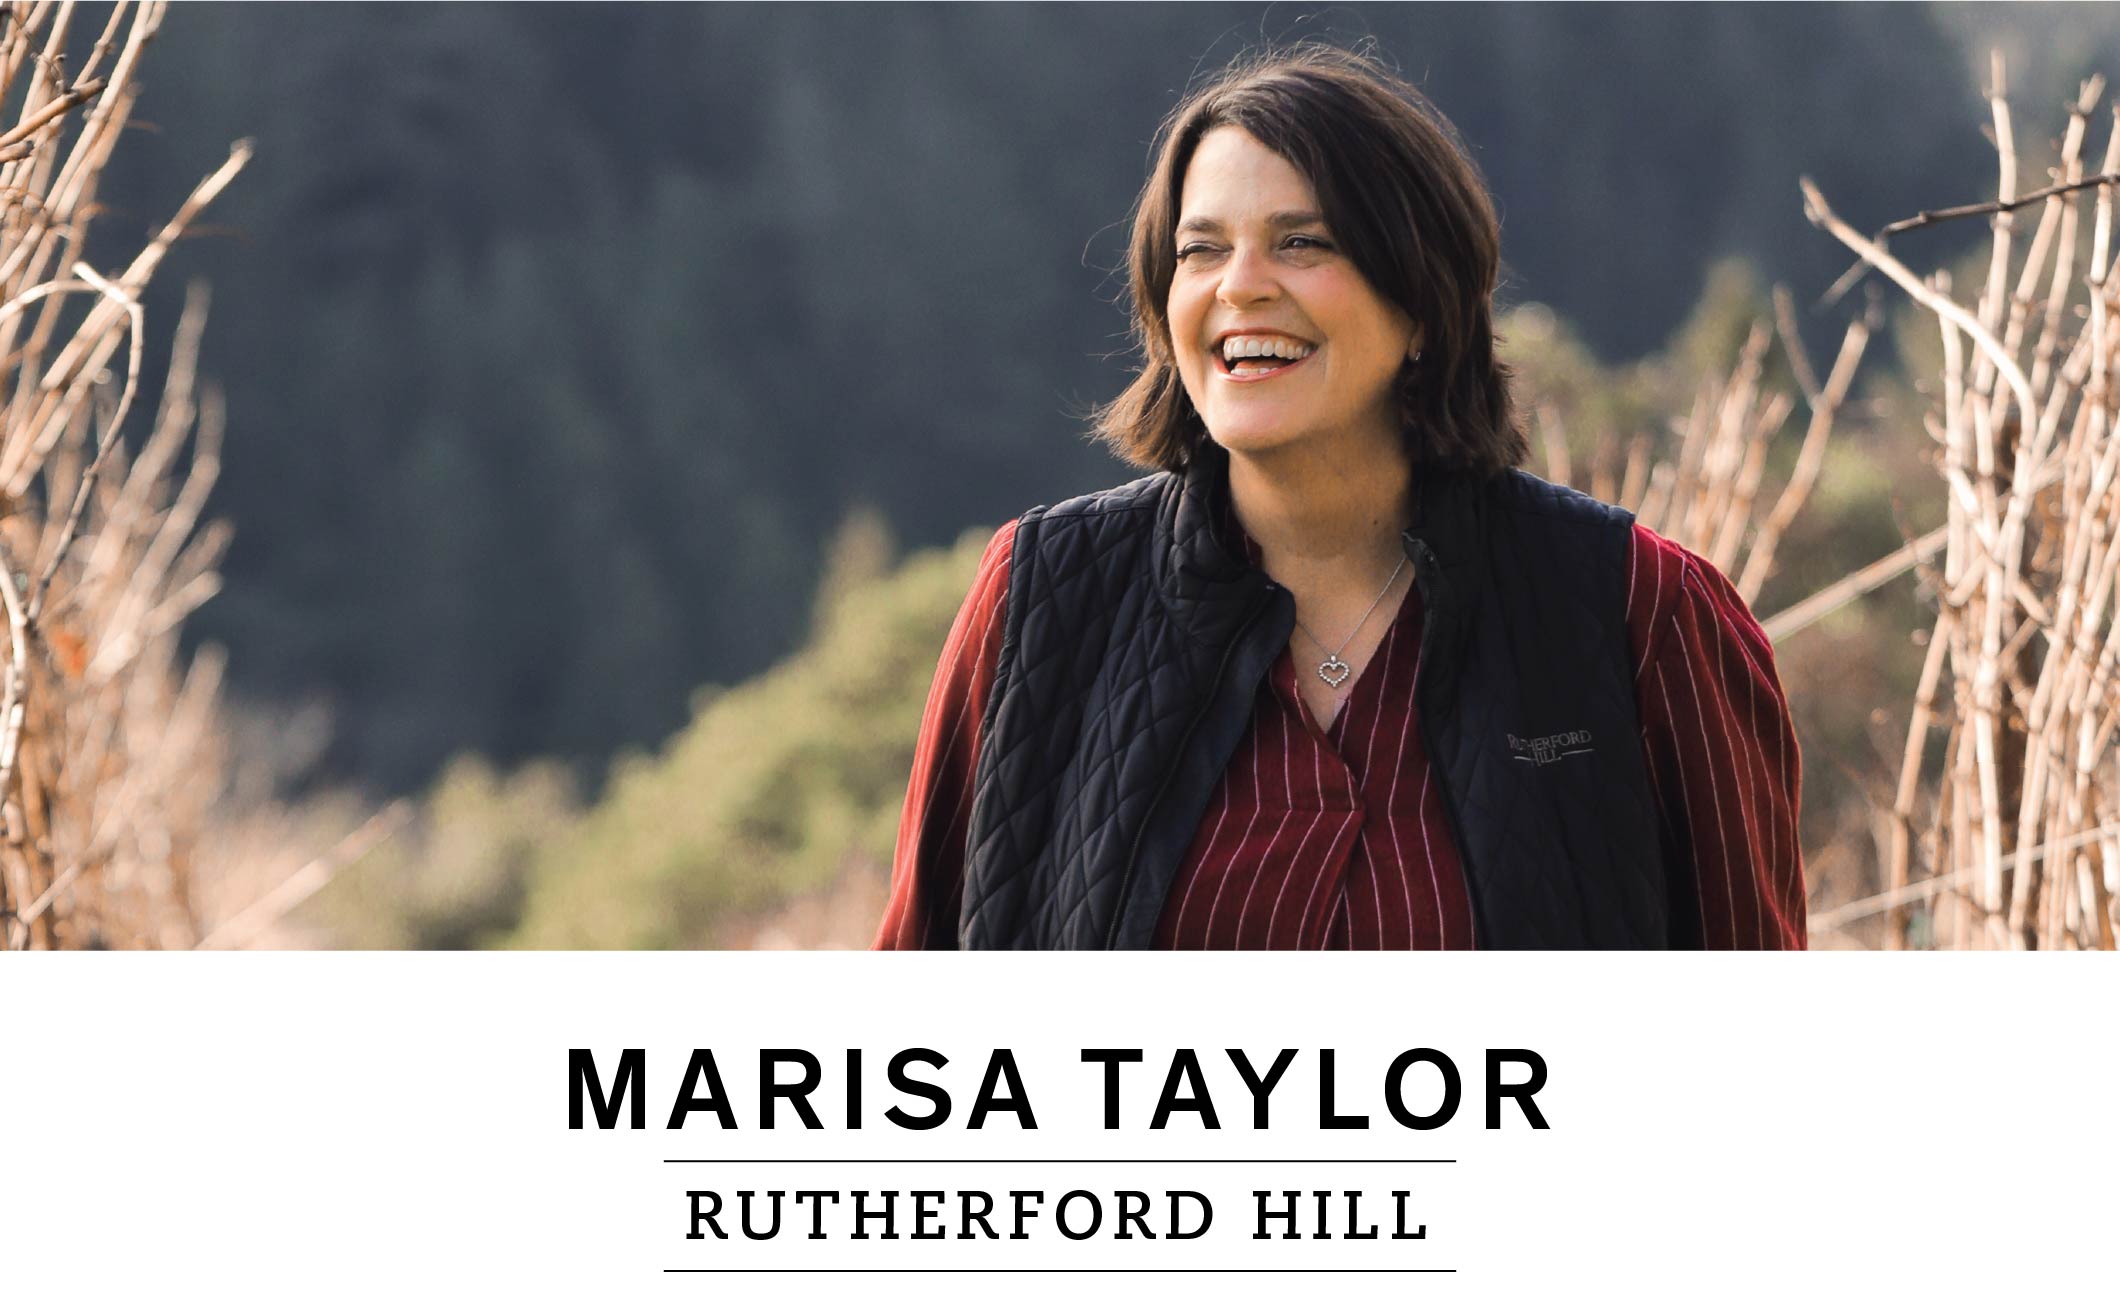 Rutherford Hill: Marisa Taylor